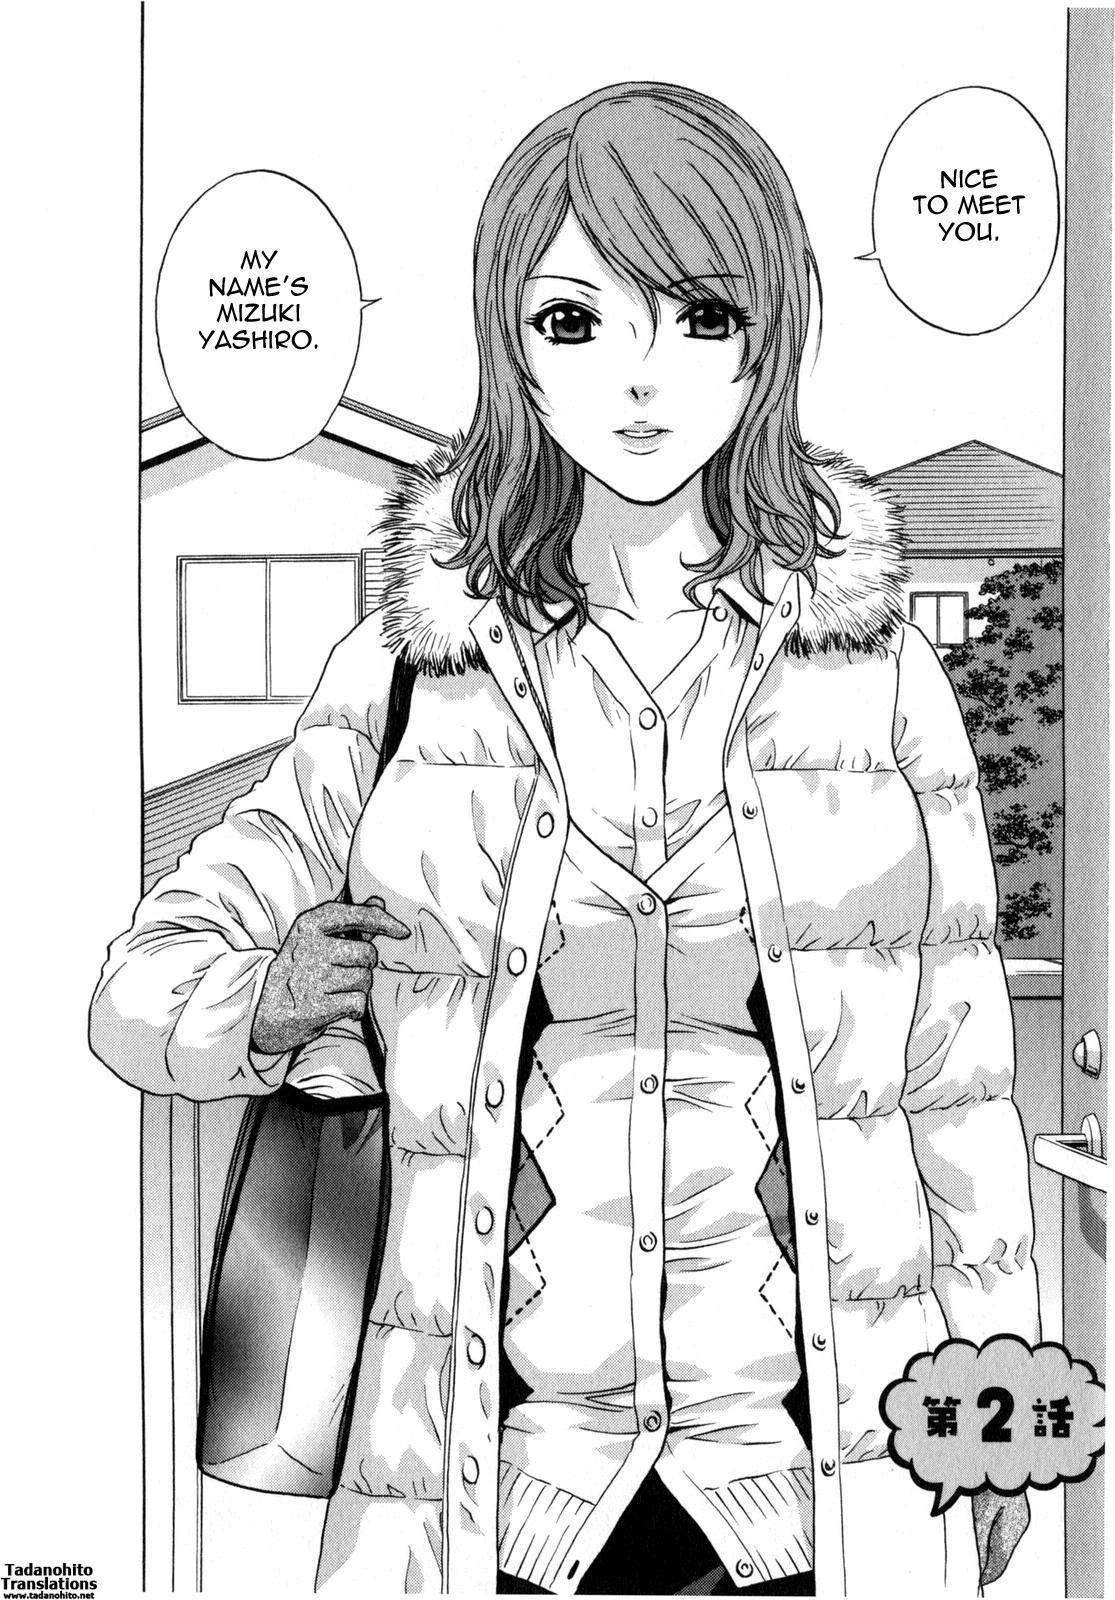 [Hidemaru] Life with Married Women Just Like a Manga 2 - Ch. 1-2 [English] {Tadanohito} 28